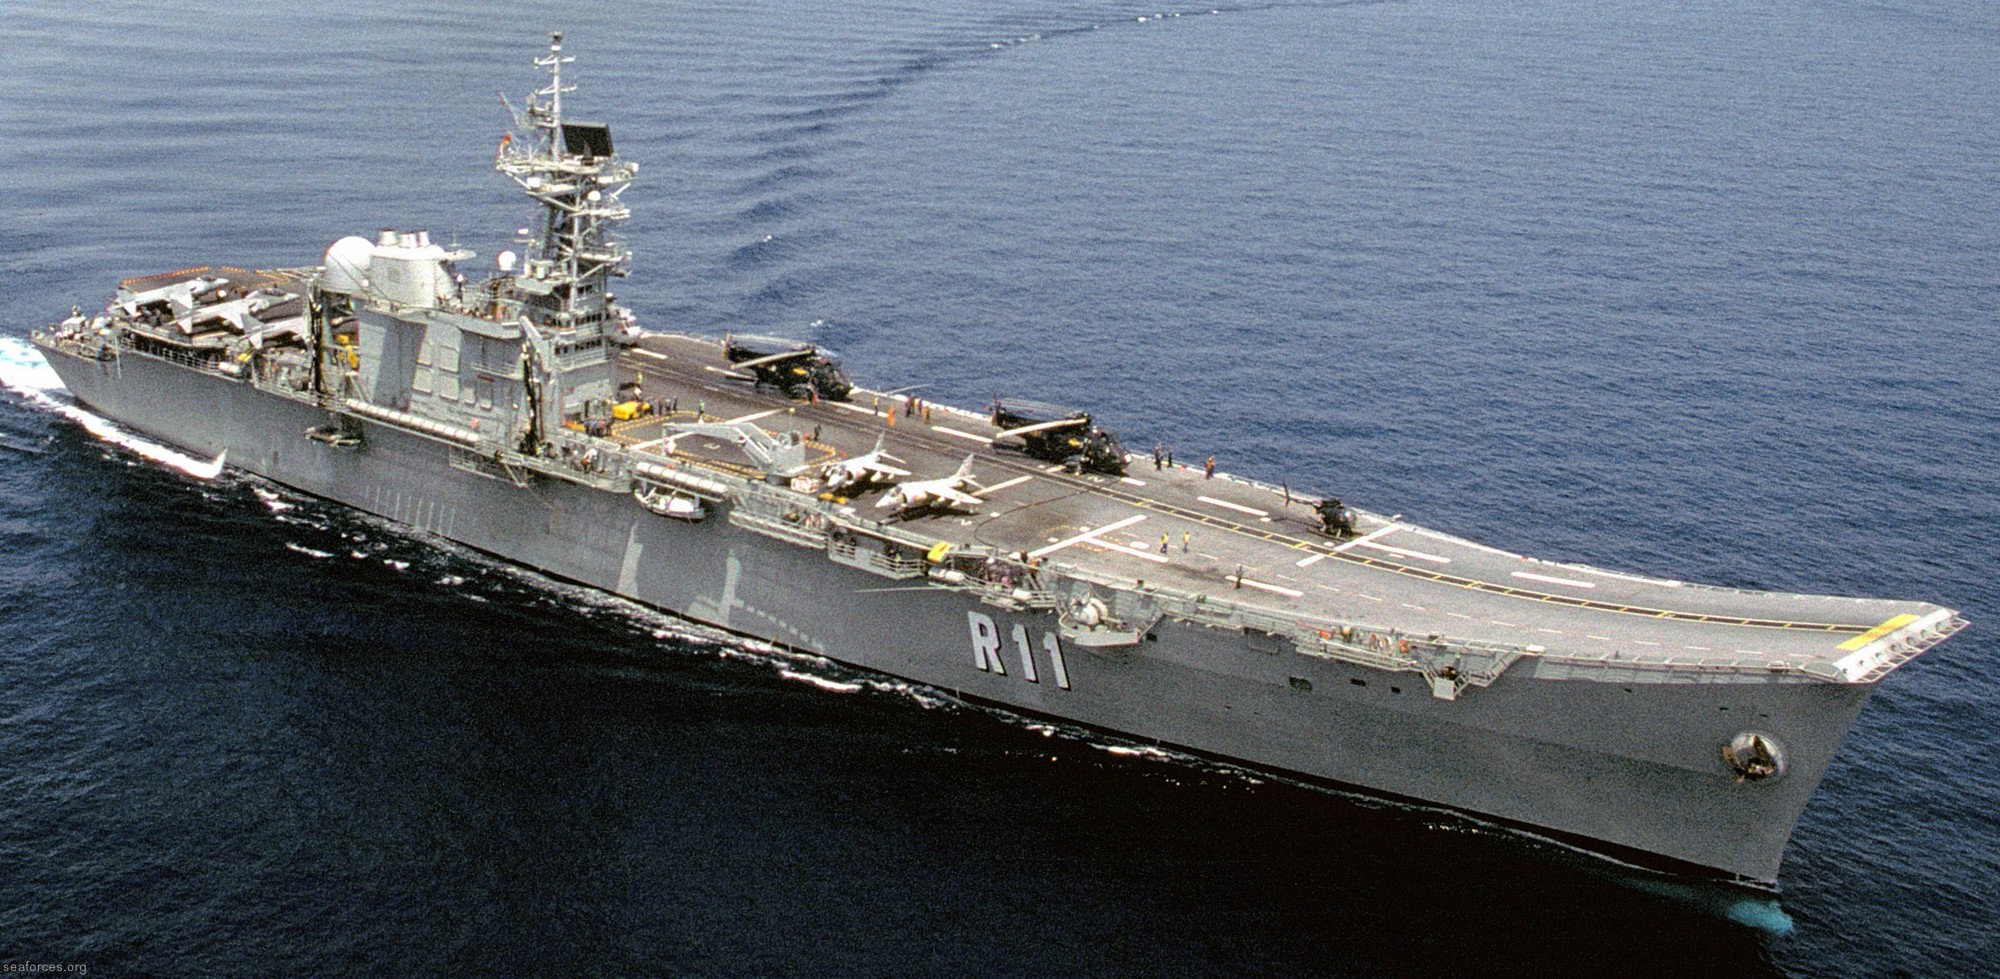 r-11 sps principe de asturias aircraft carrier vstol spanish navy 02x